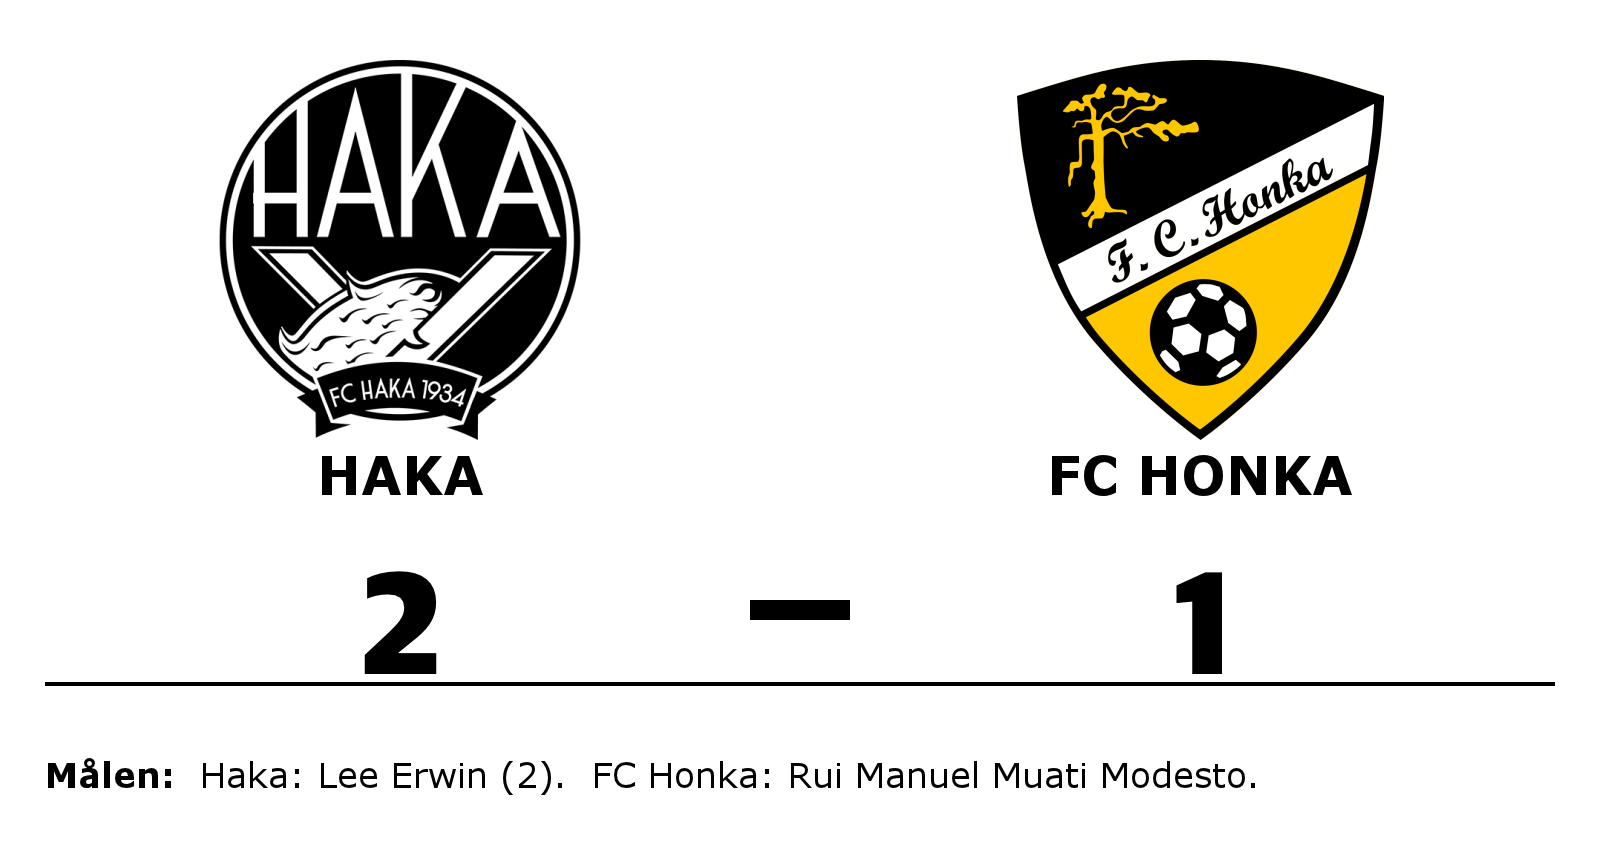 Haka vann mot FC Honka